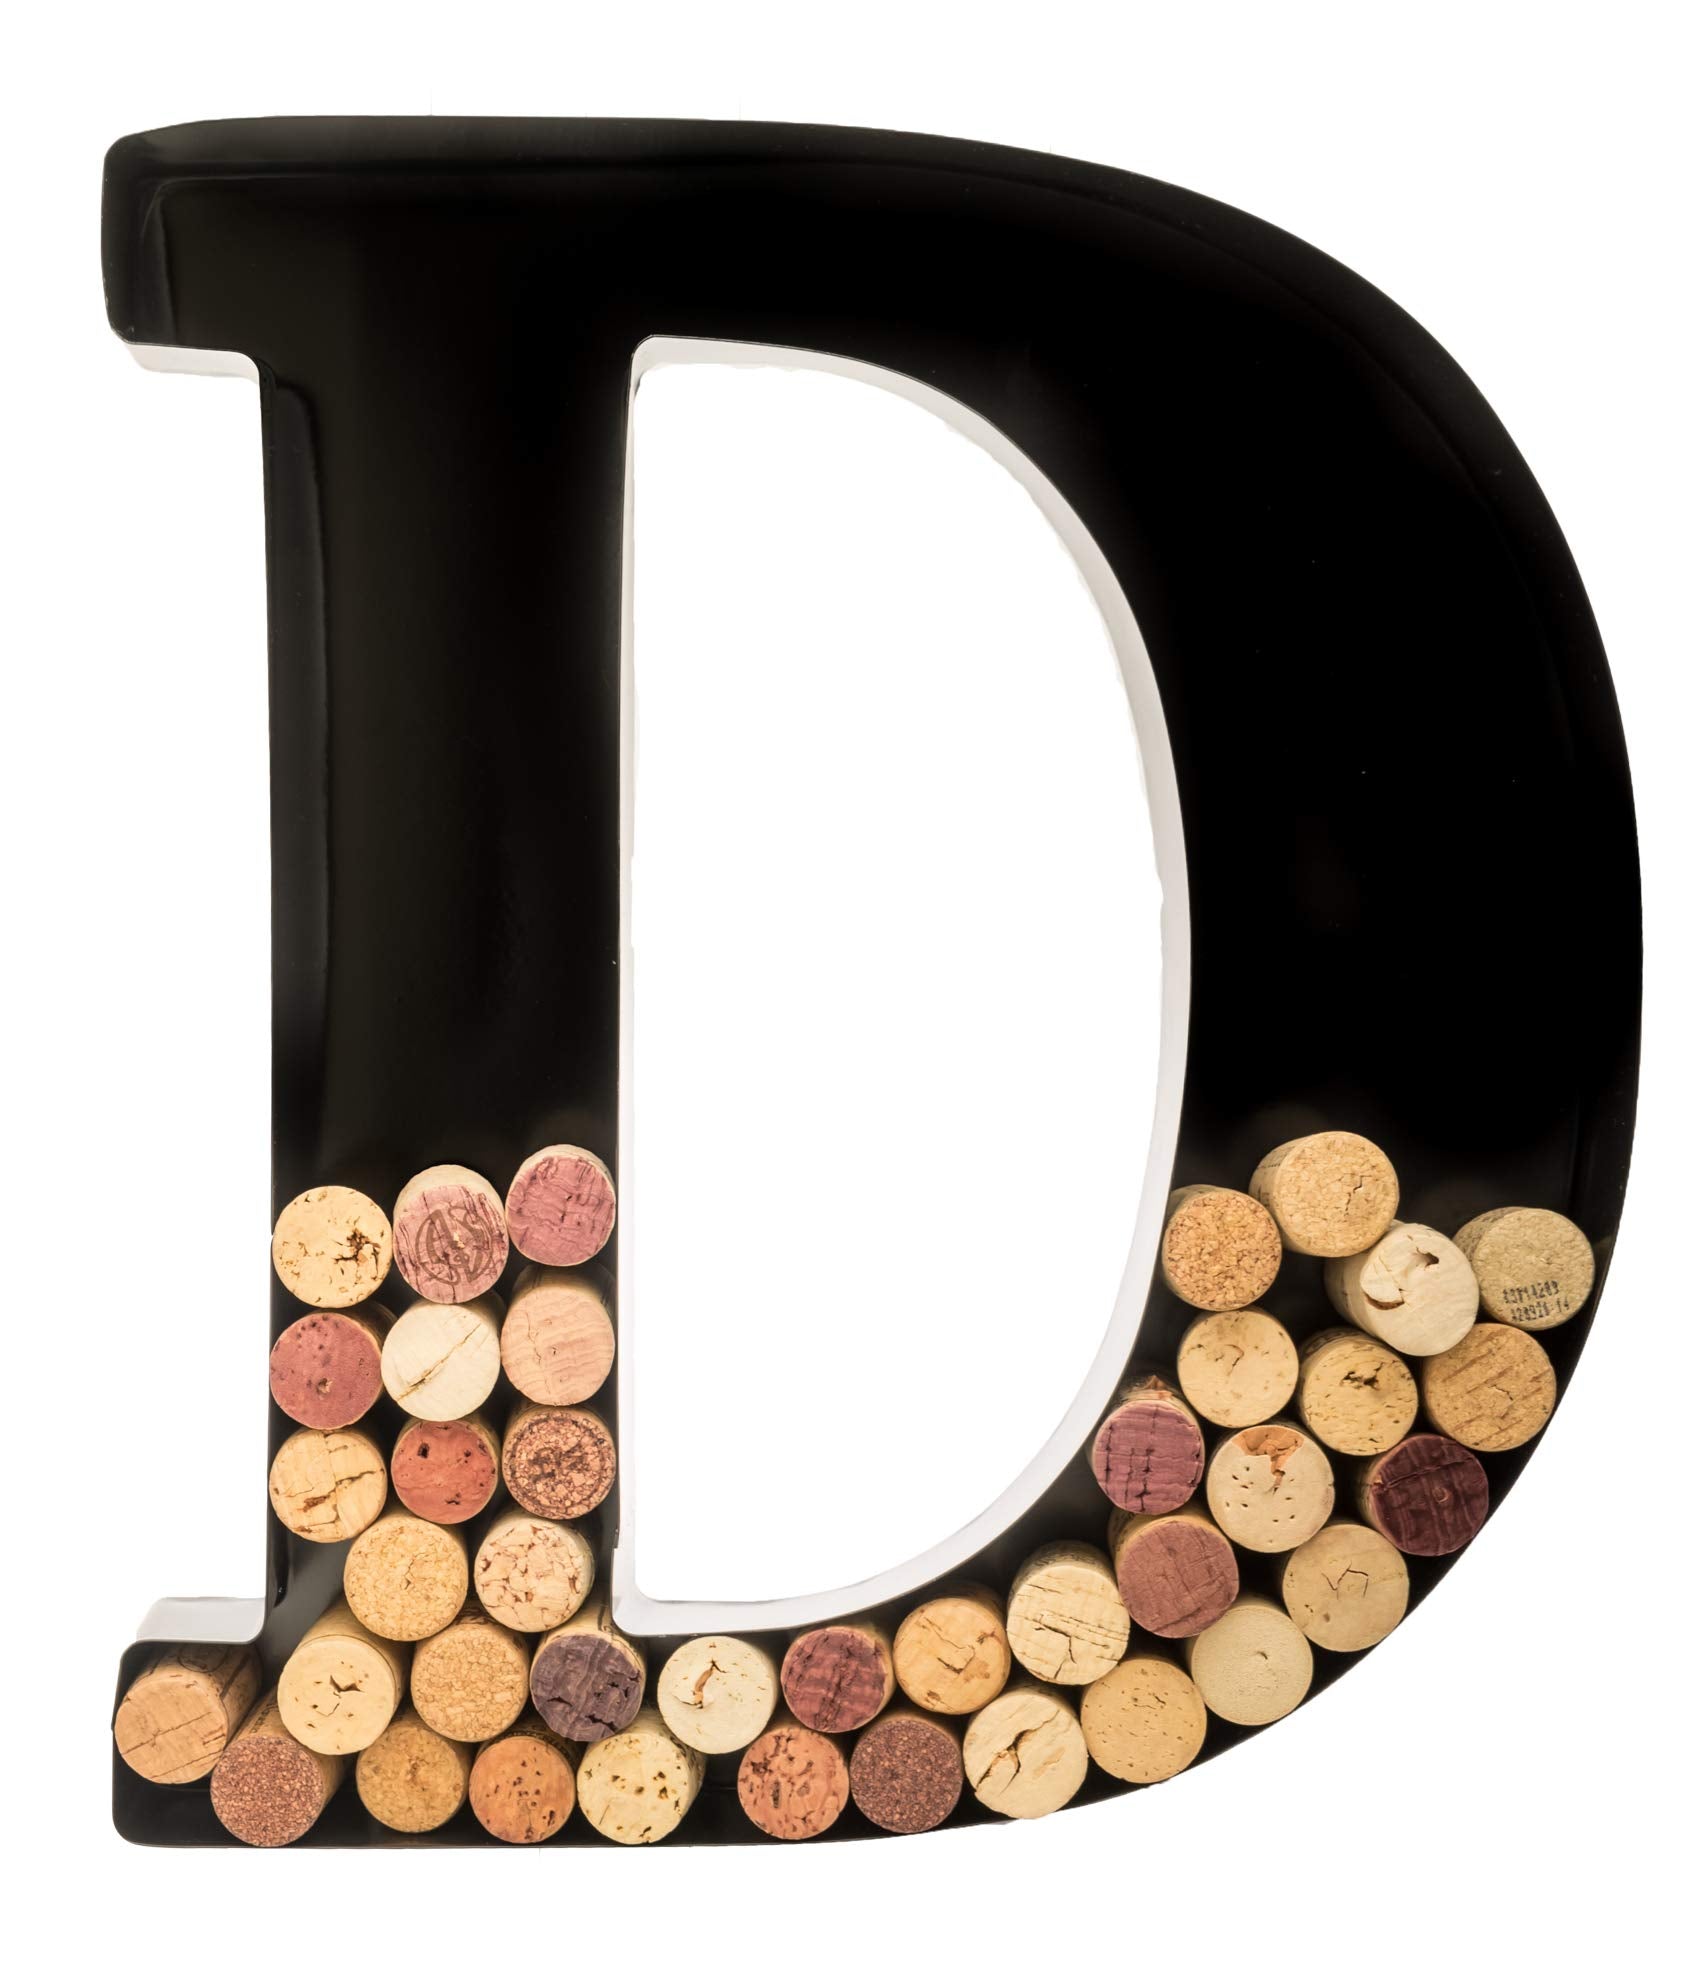 Wine Cork Holder - Metal Monogram Letter (D)